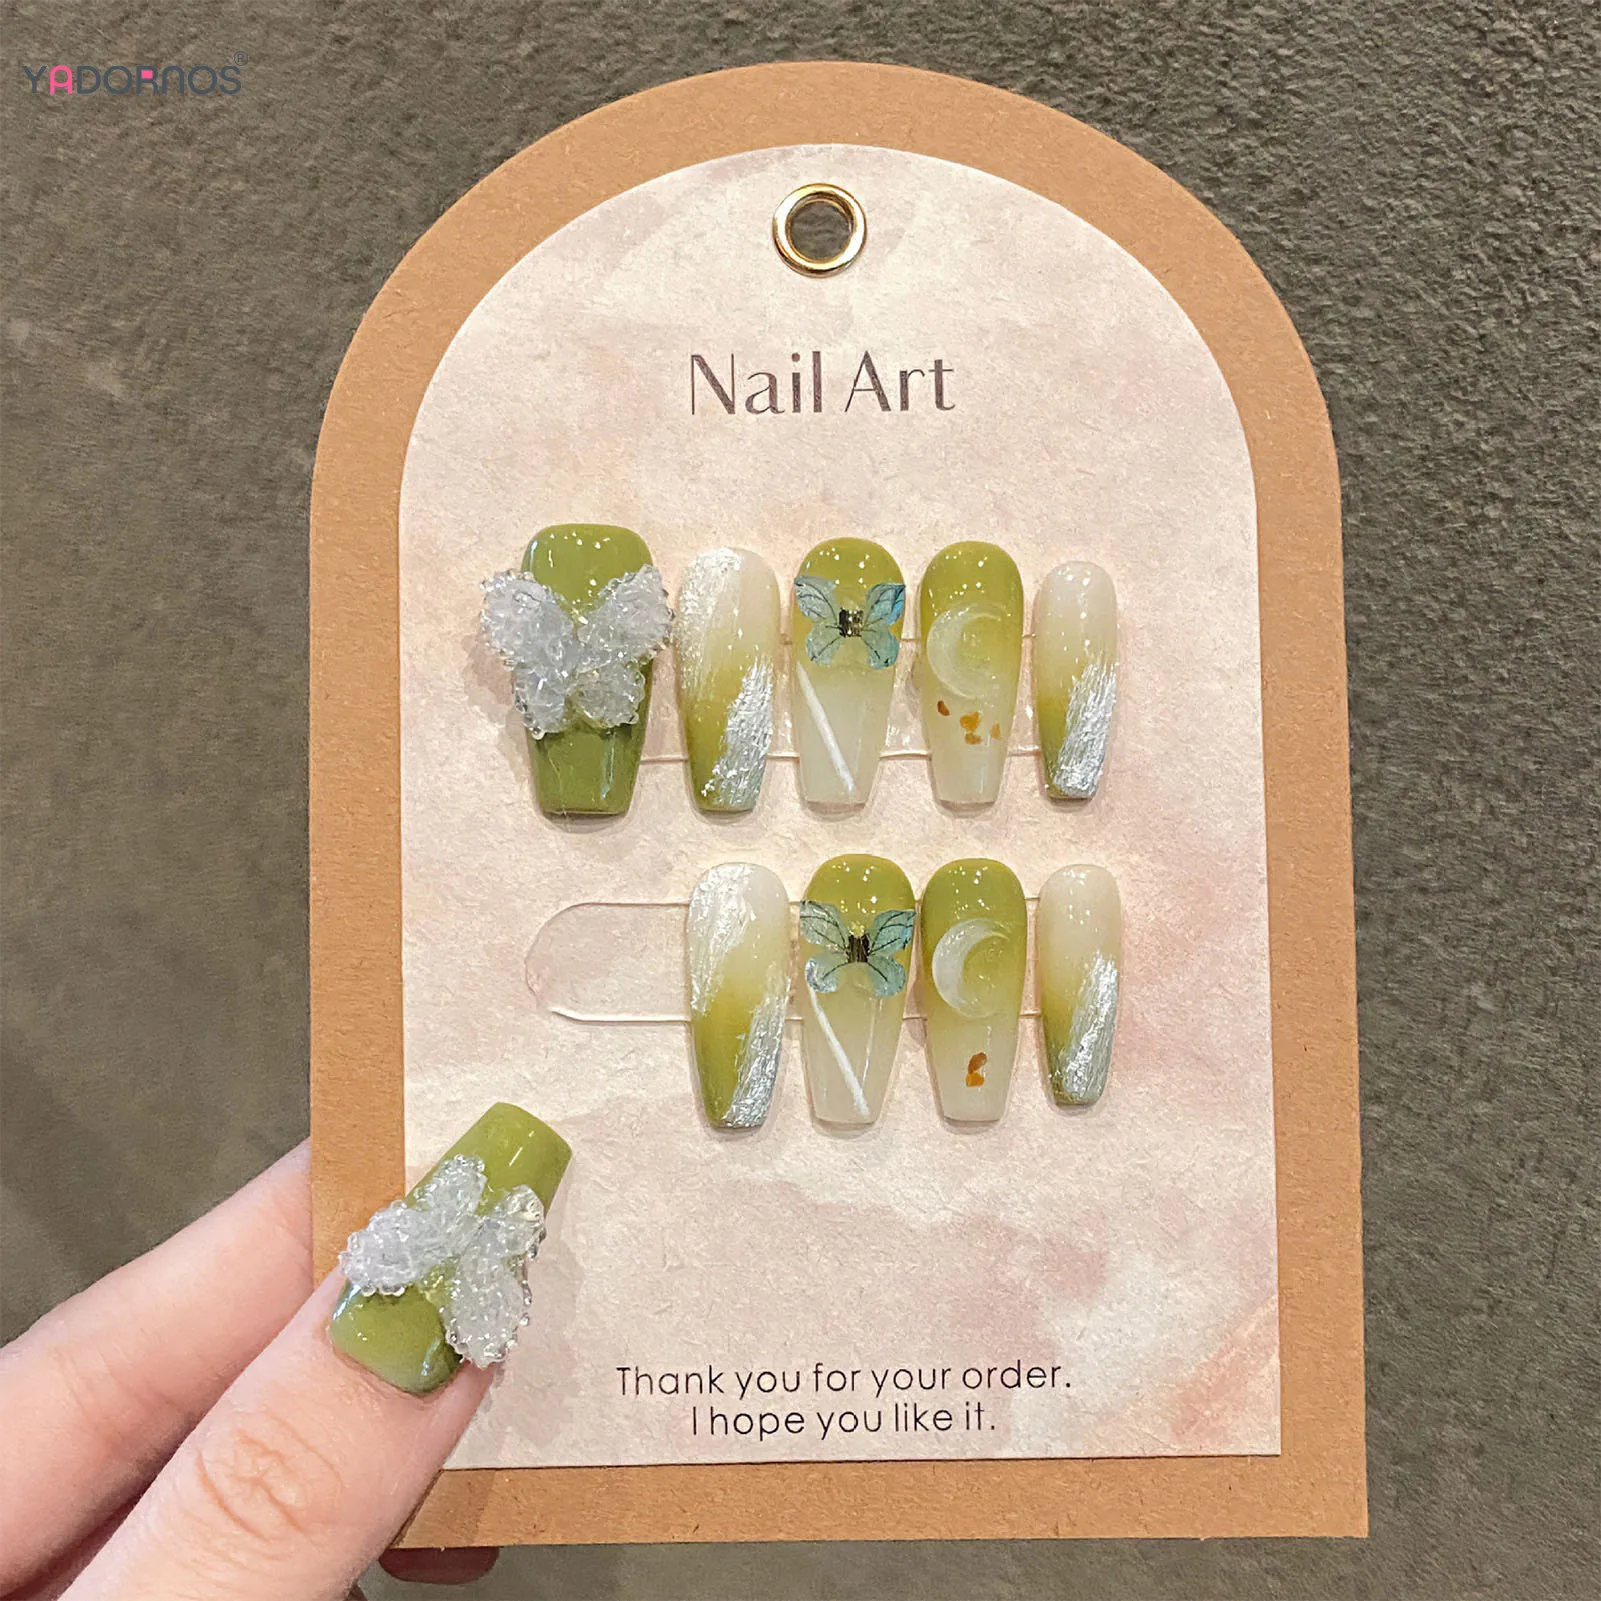 Gradiente verde artesanal unhas falsas para mulheres, brilho, cristal, borboleta projetada, bailarina, wearable, unhas falsas